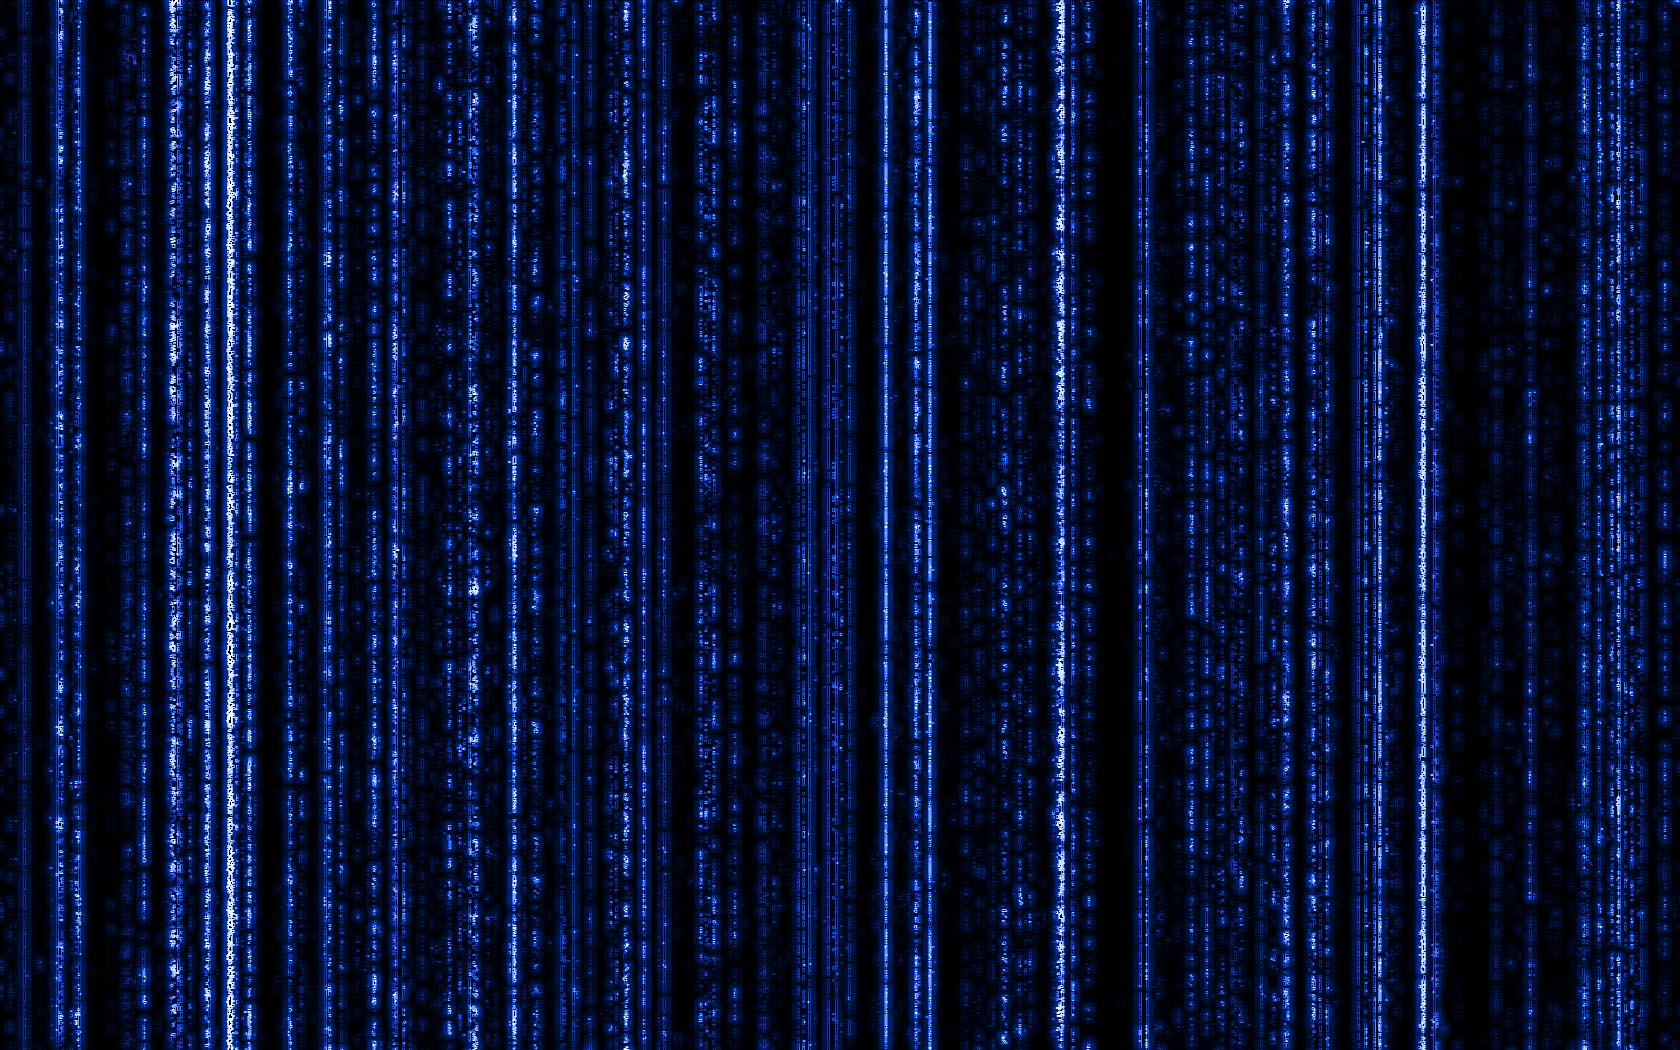 HD Matrix Wallpaper By Puffthemagicdragon92